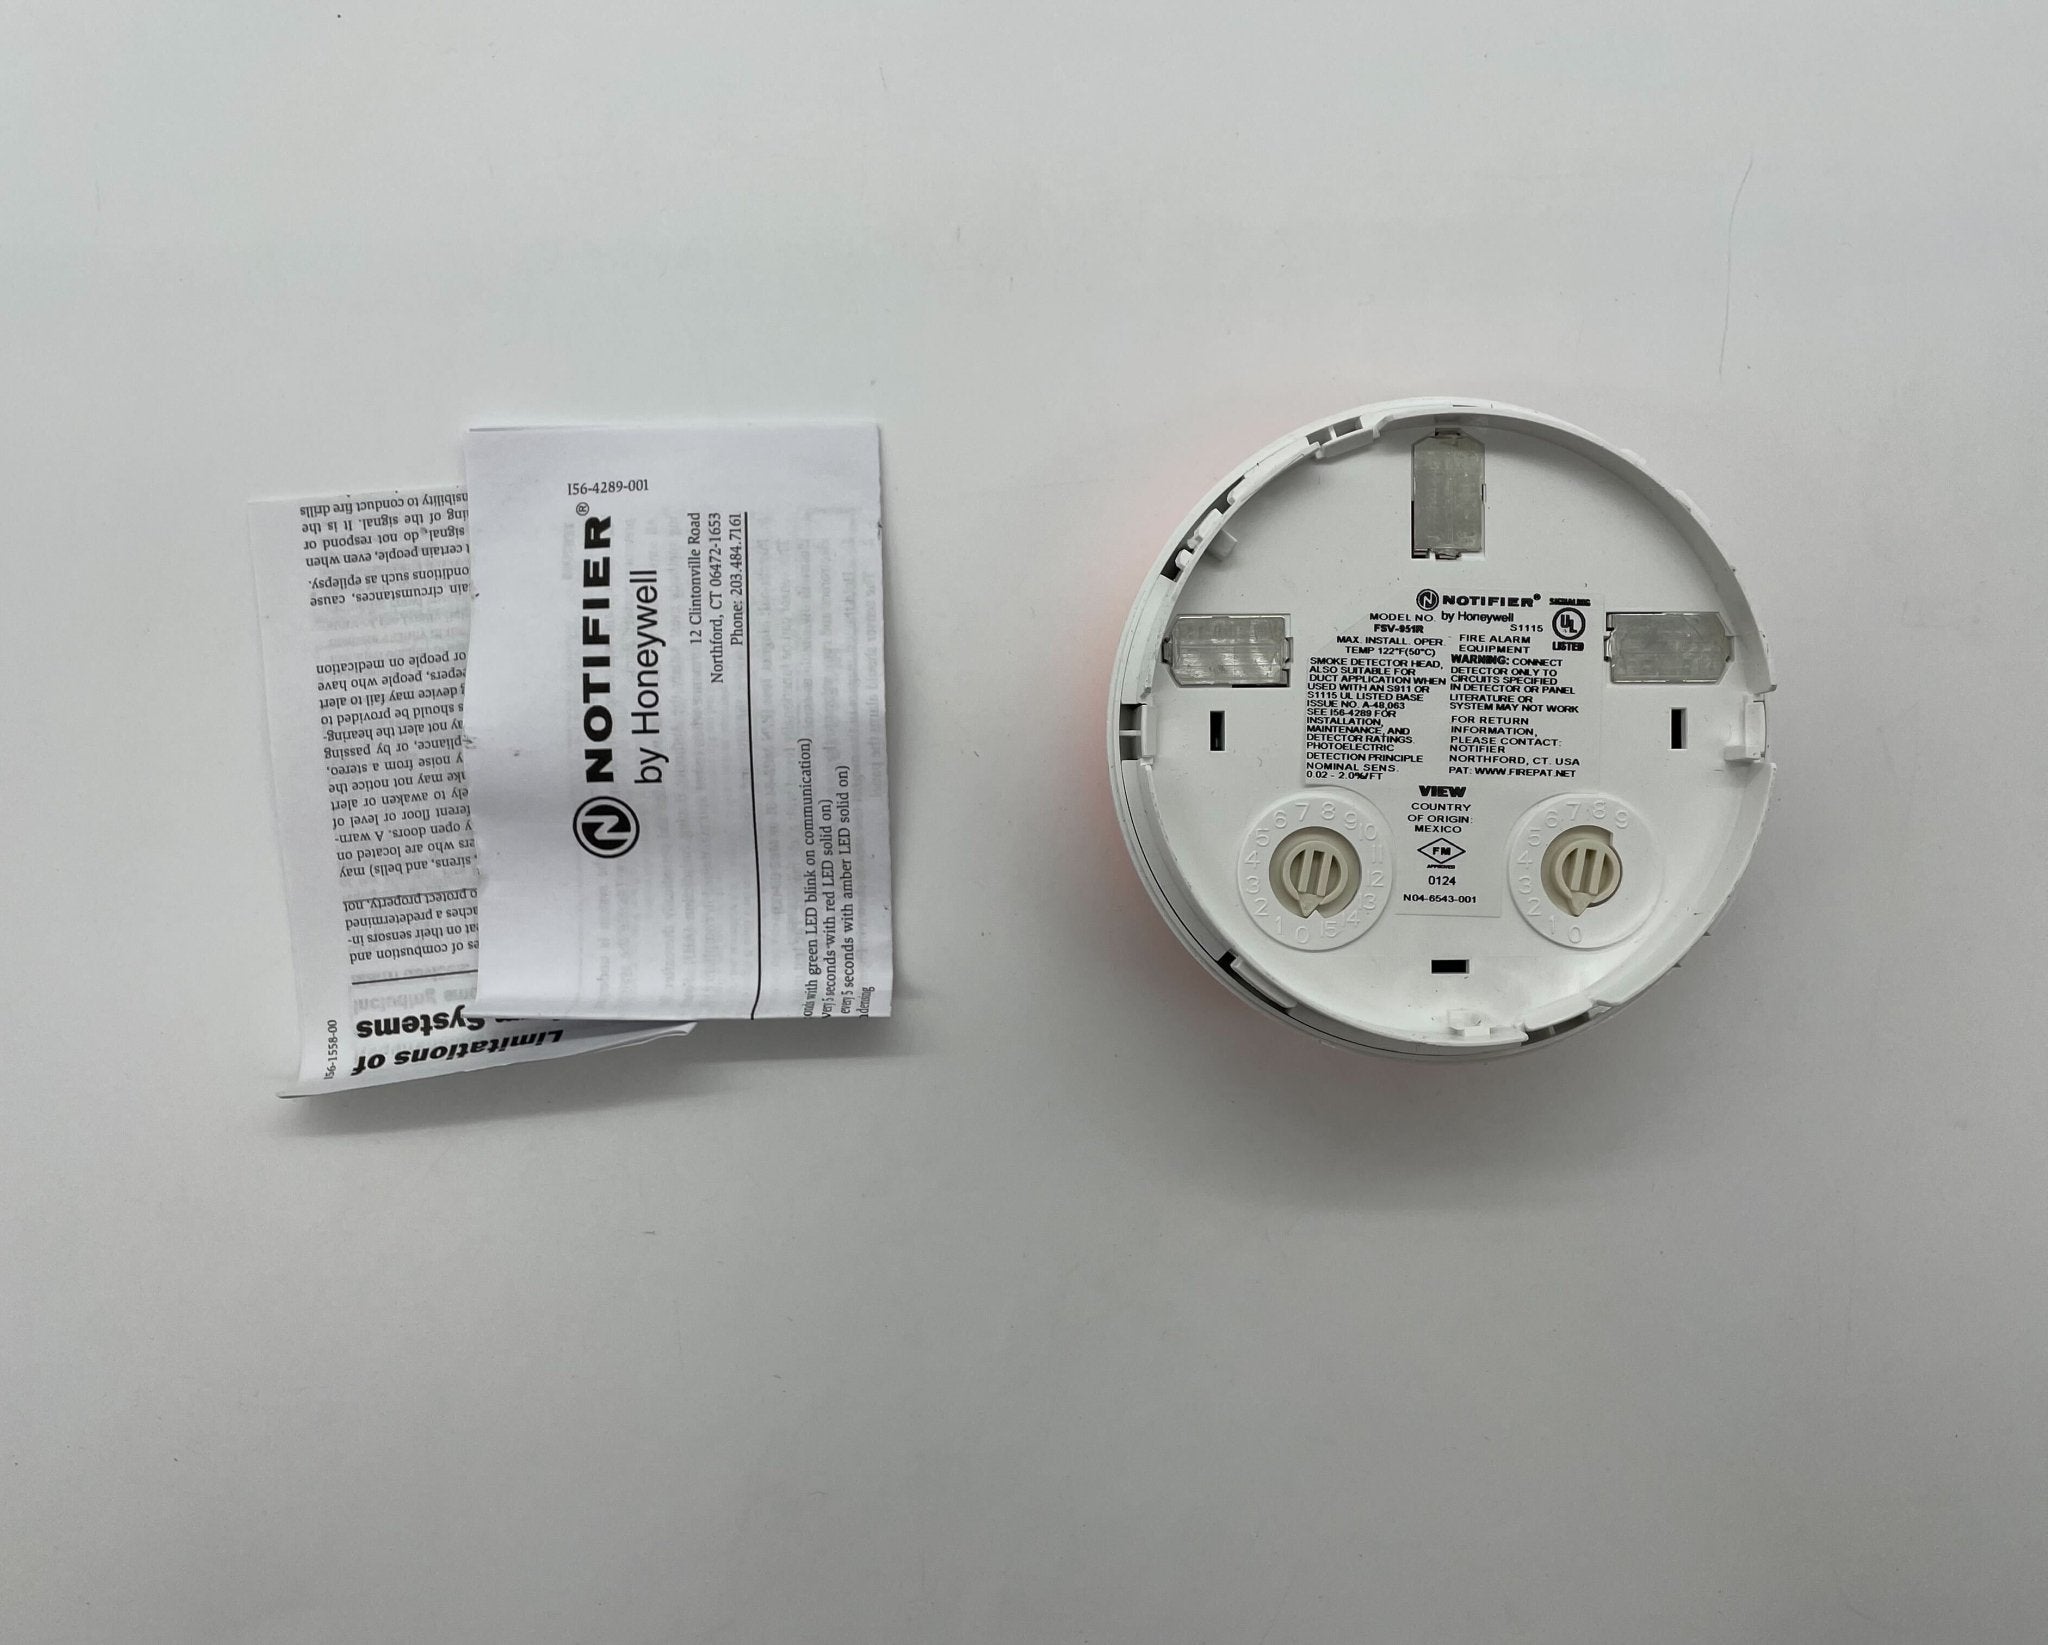 Notifier FSV-951R - The Fire Alarm Supplier